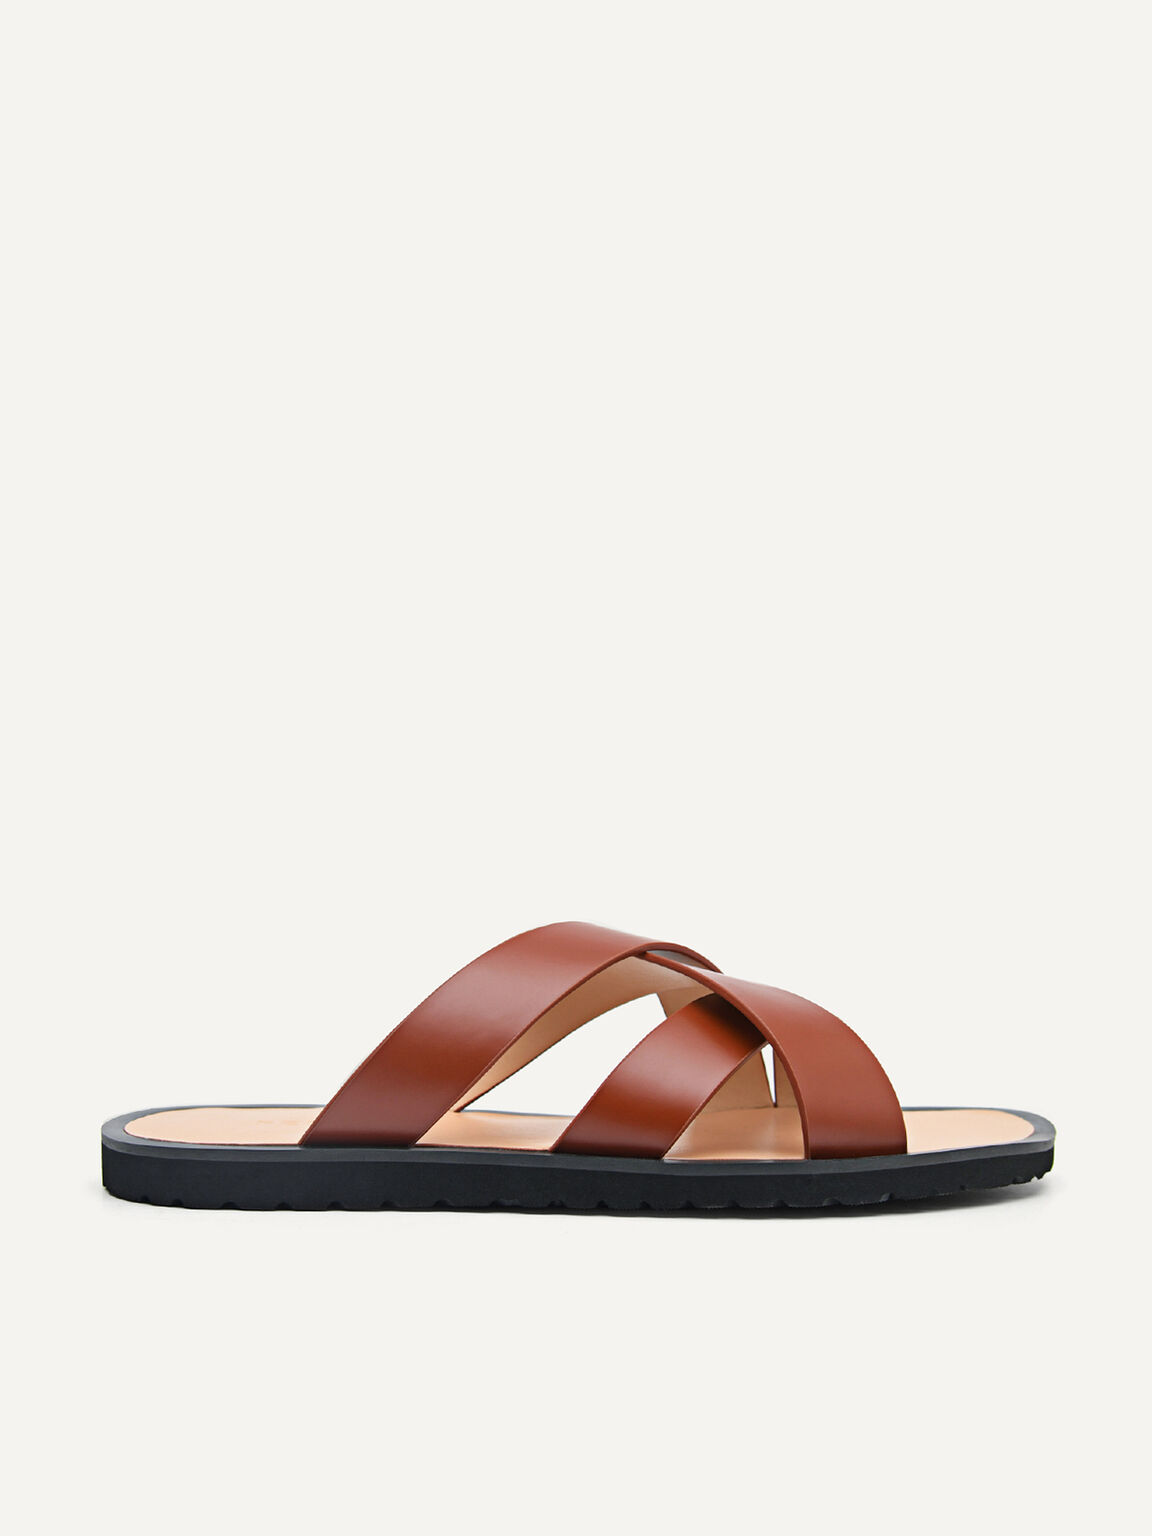 Dune Cross Strap Sandals, Brown